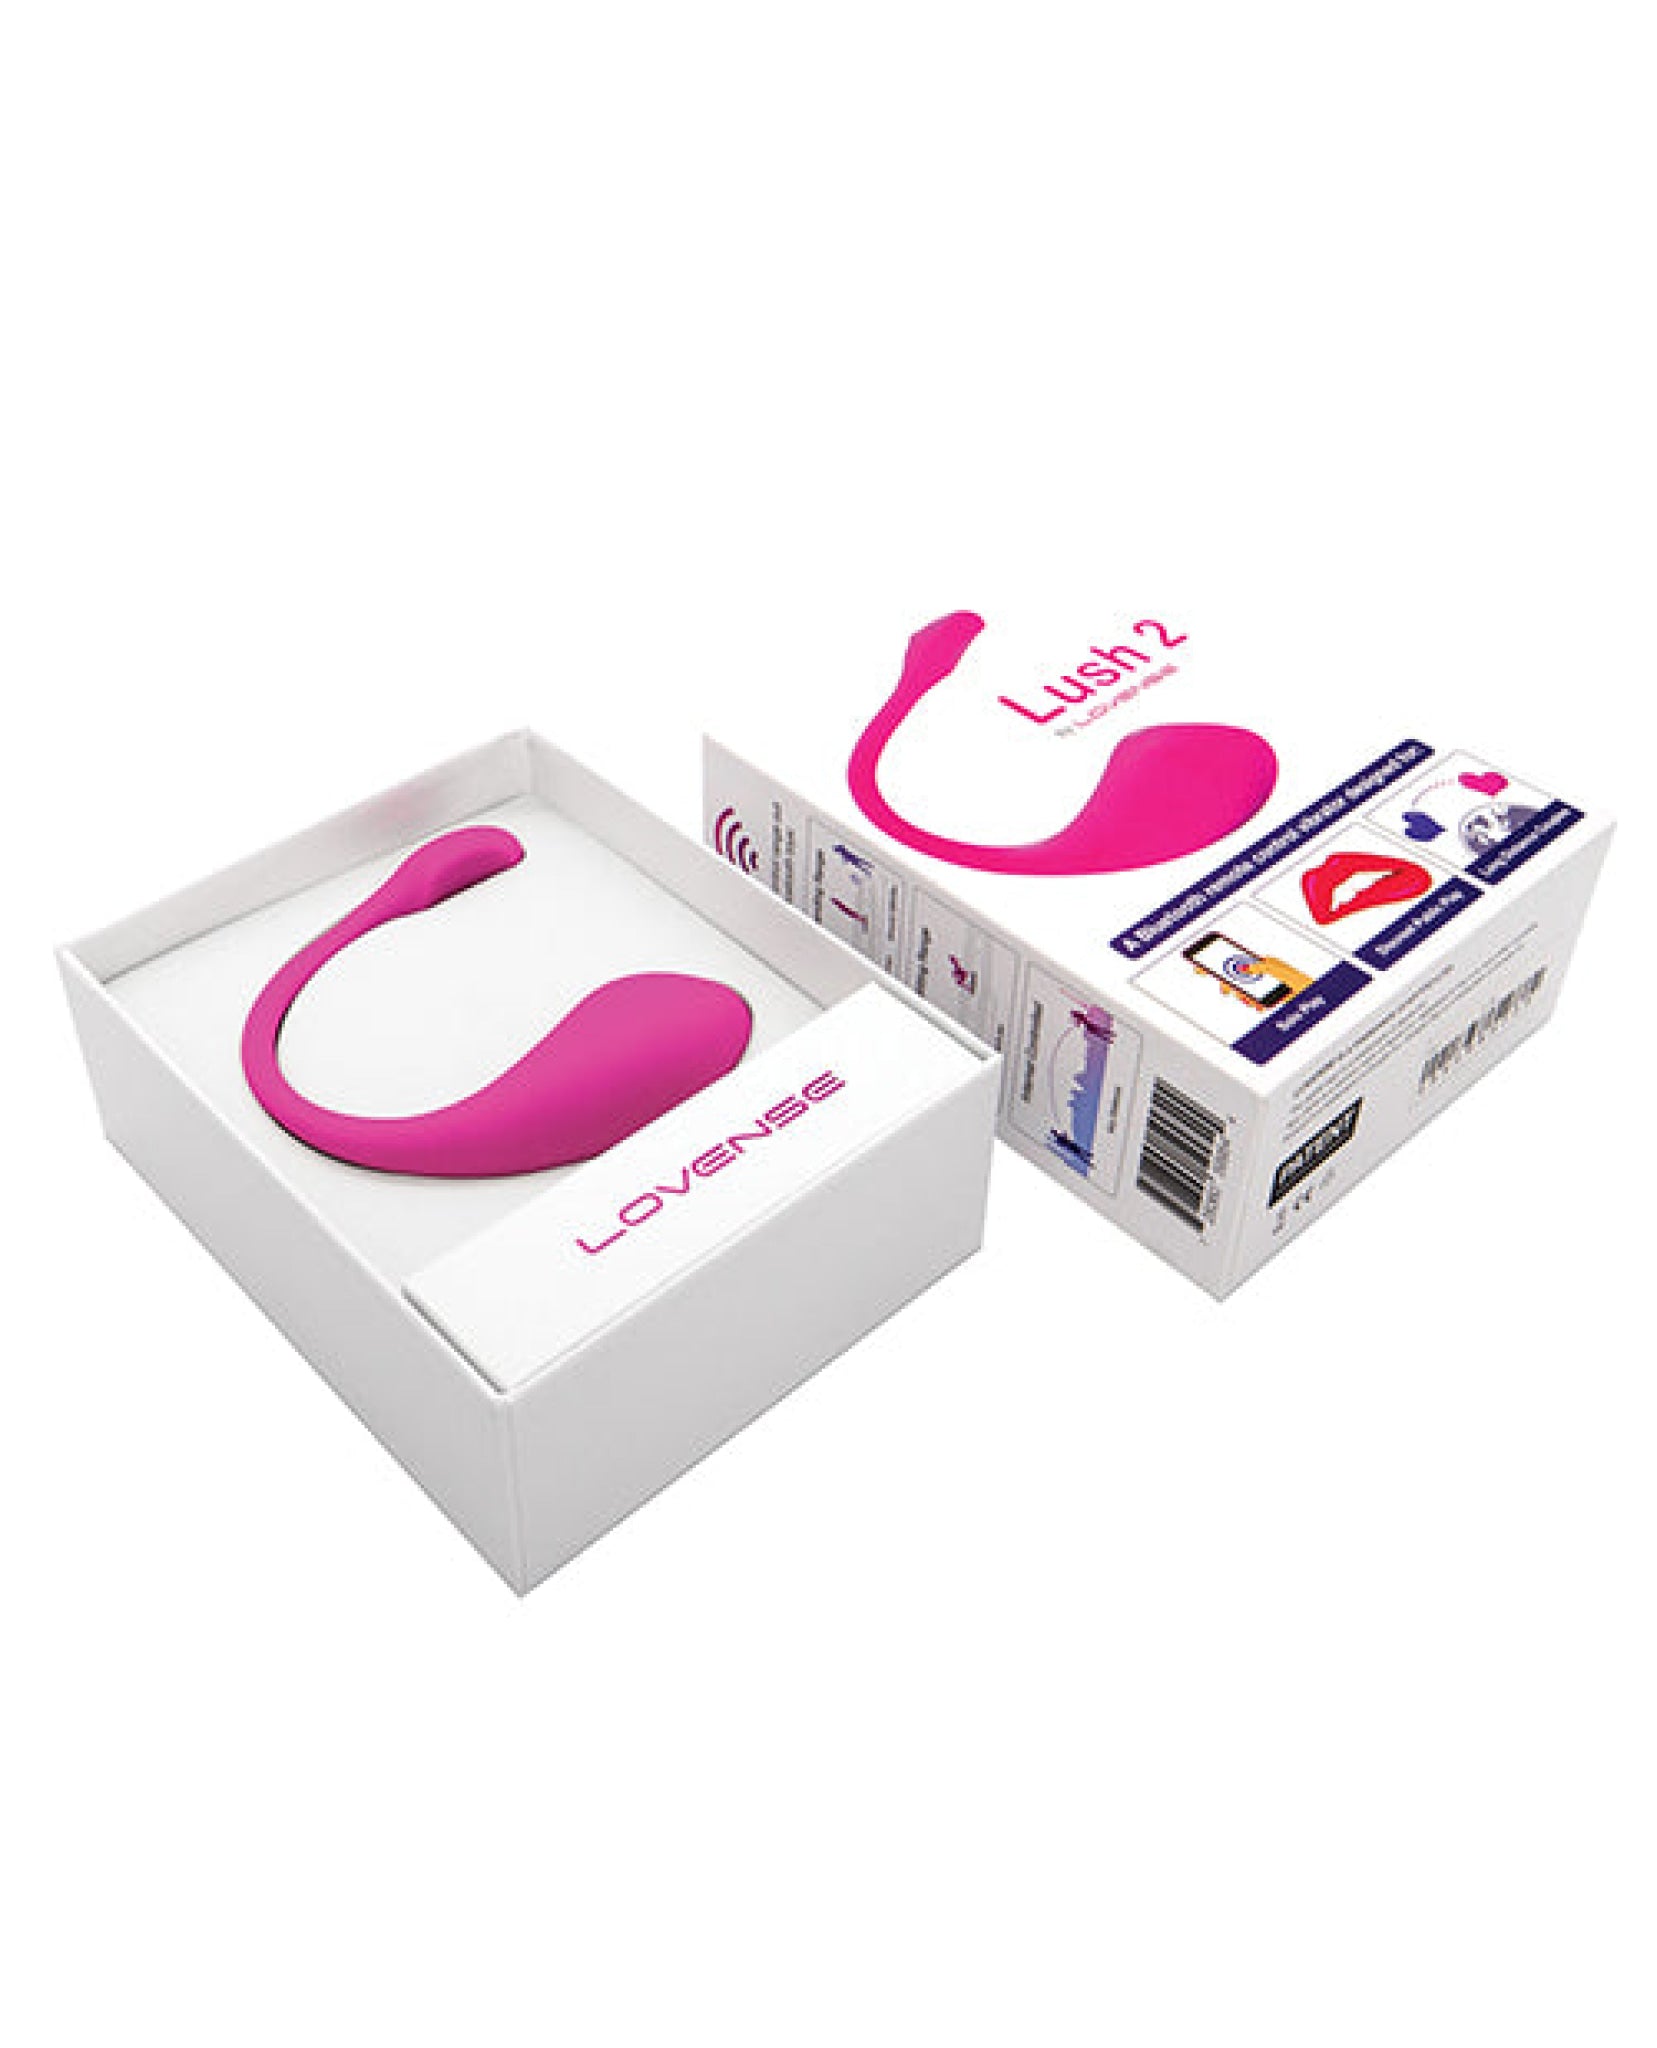 Lovense Lush 2.0 Sound Activated Vibrator - Pink Lovense®